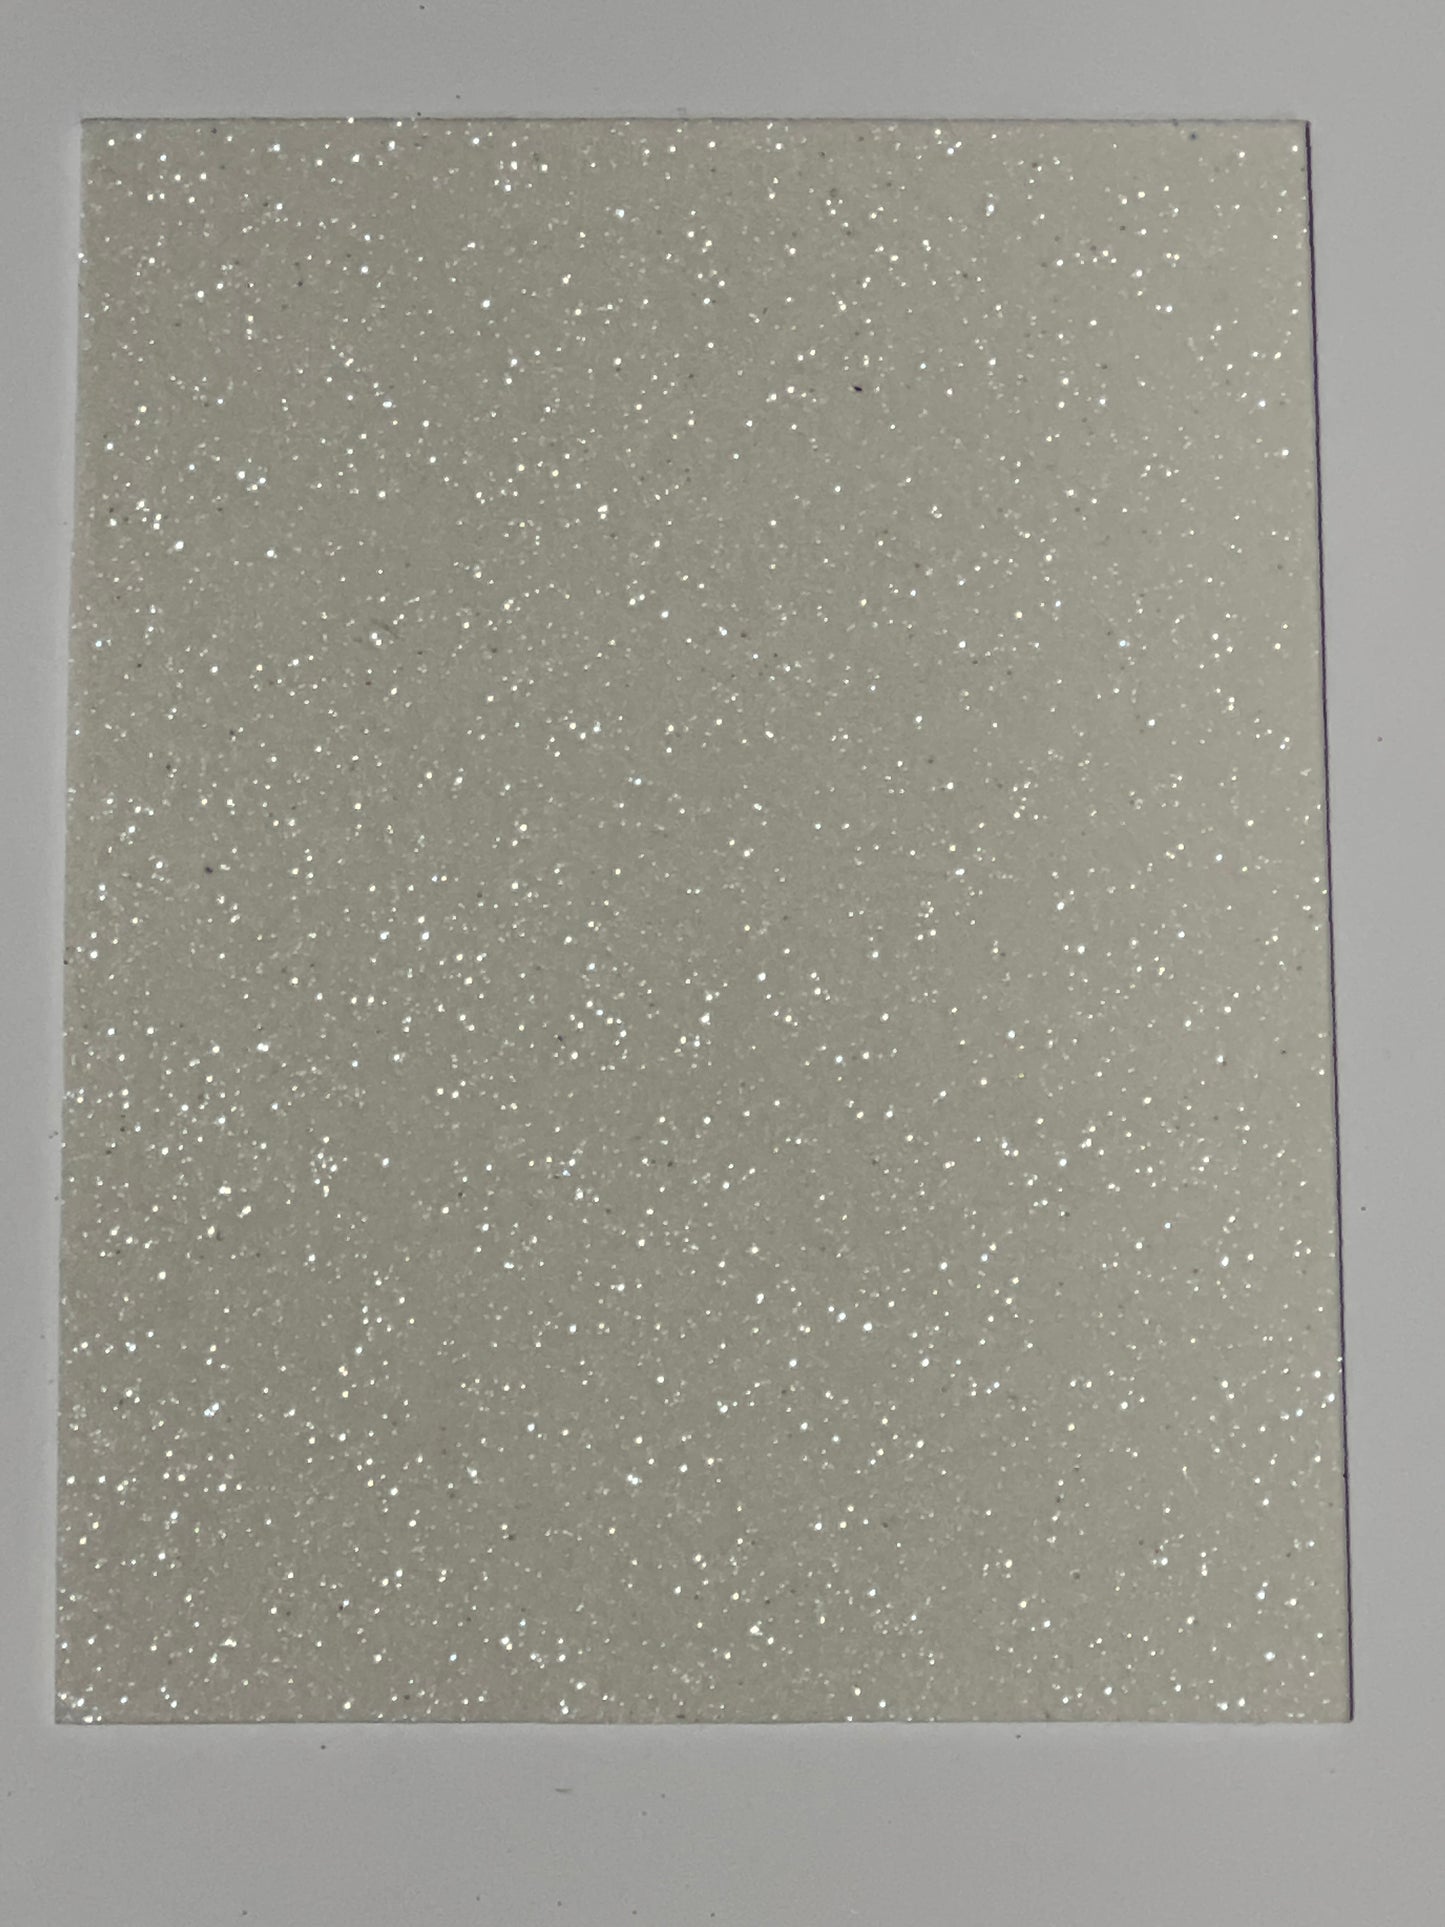 Craft Foam Glitter White - Size Approx 16cm x 21cm - Thickness 2mm